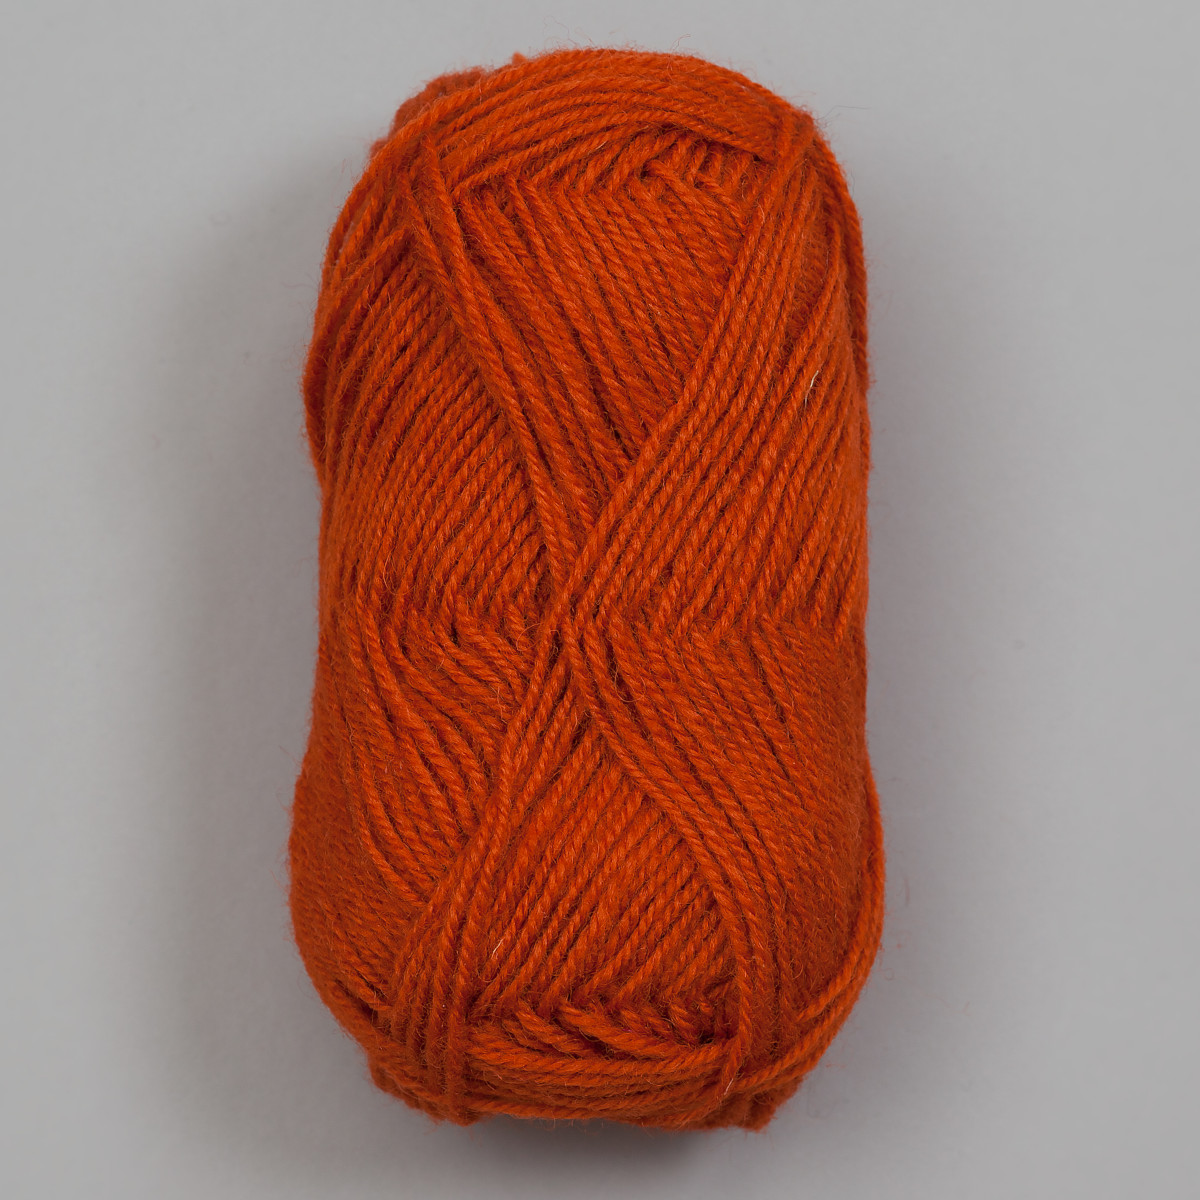 3-tråds strikkegarn - Mørk oransje (177)